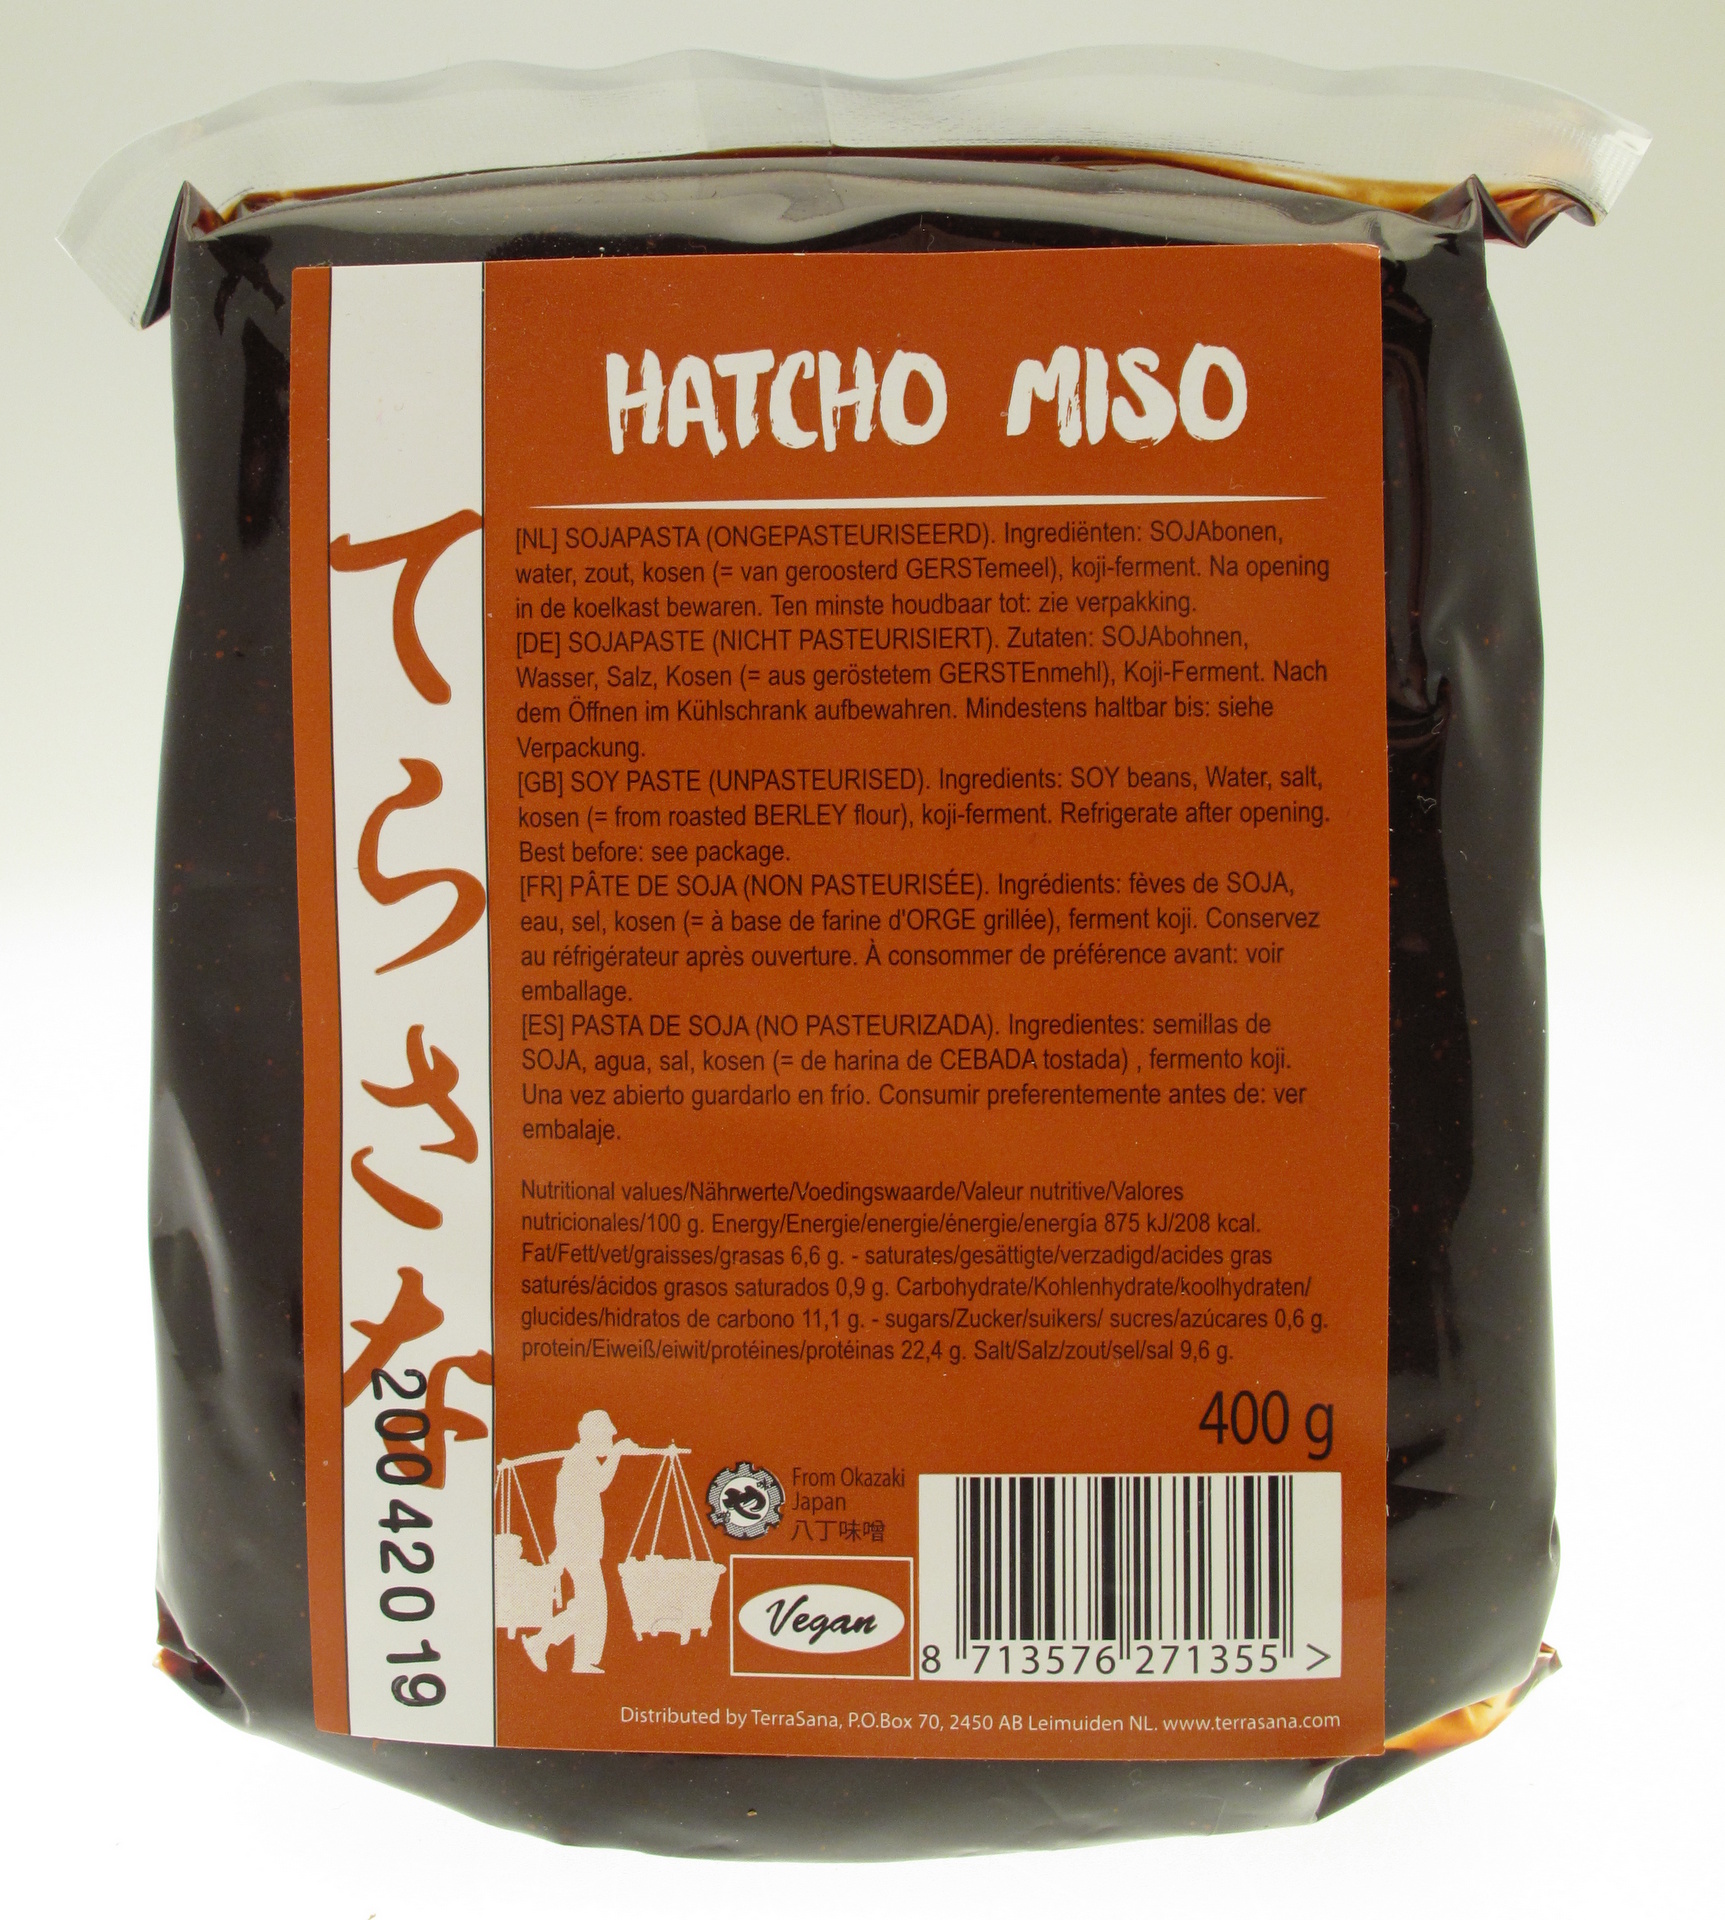 Hatcho Miso (unpasteurisiert)